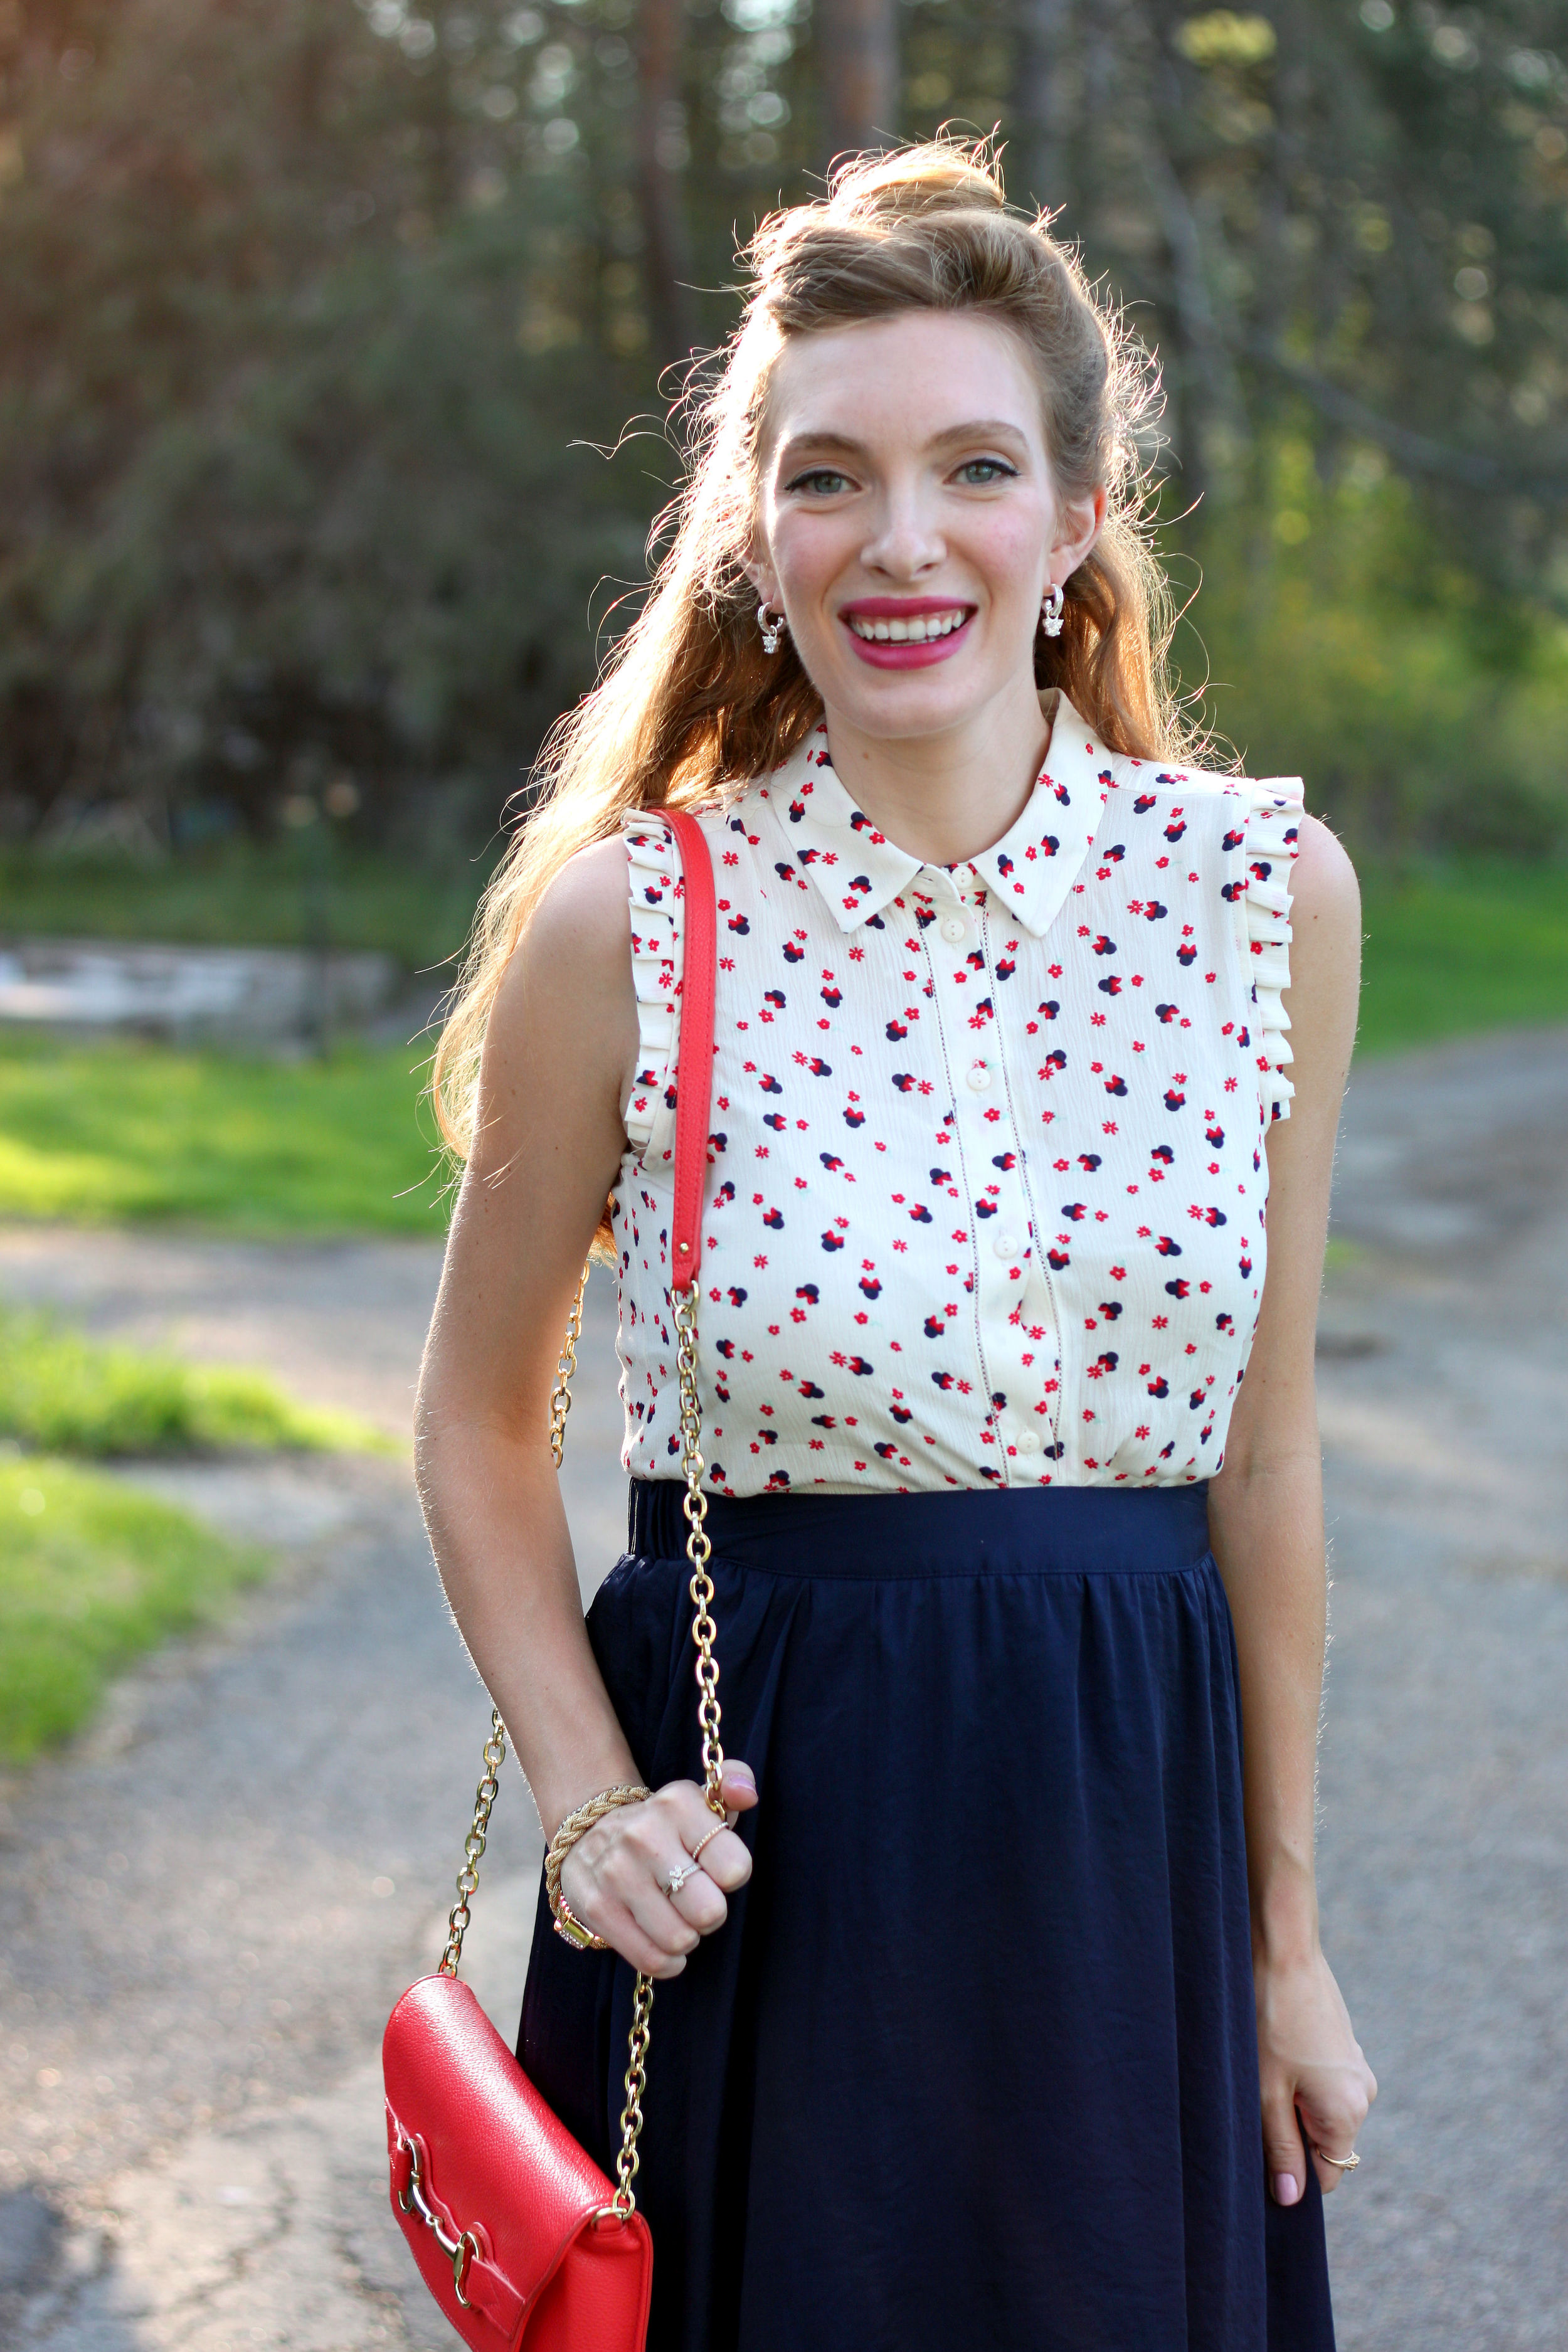 Lauren Conrad looks stylish in polka dot blouse and trendy maroon